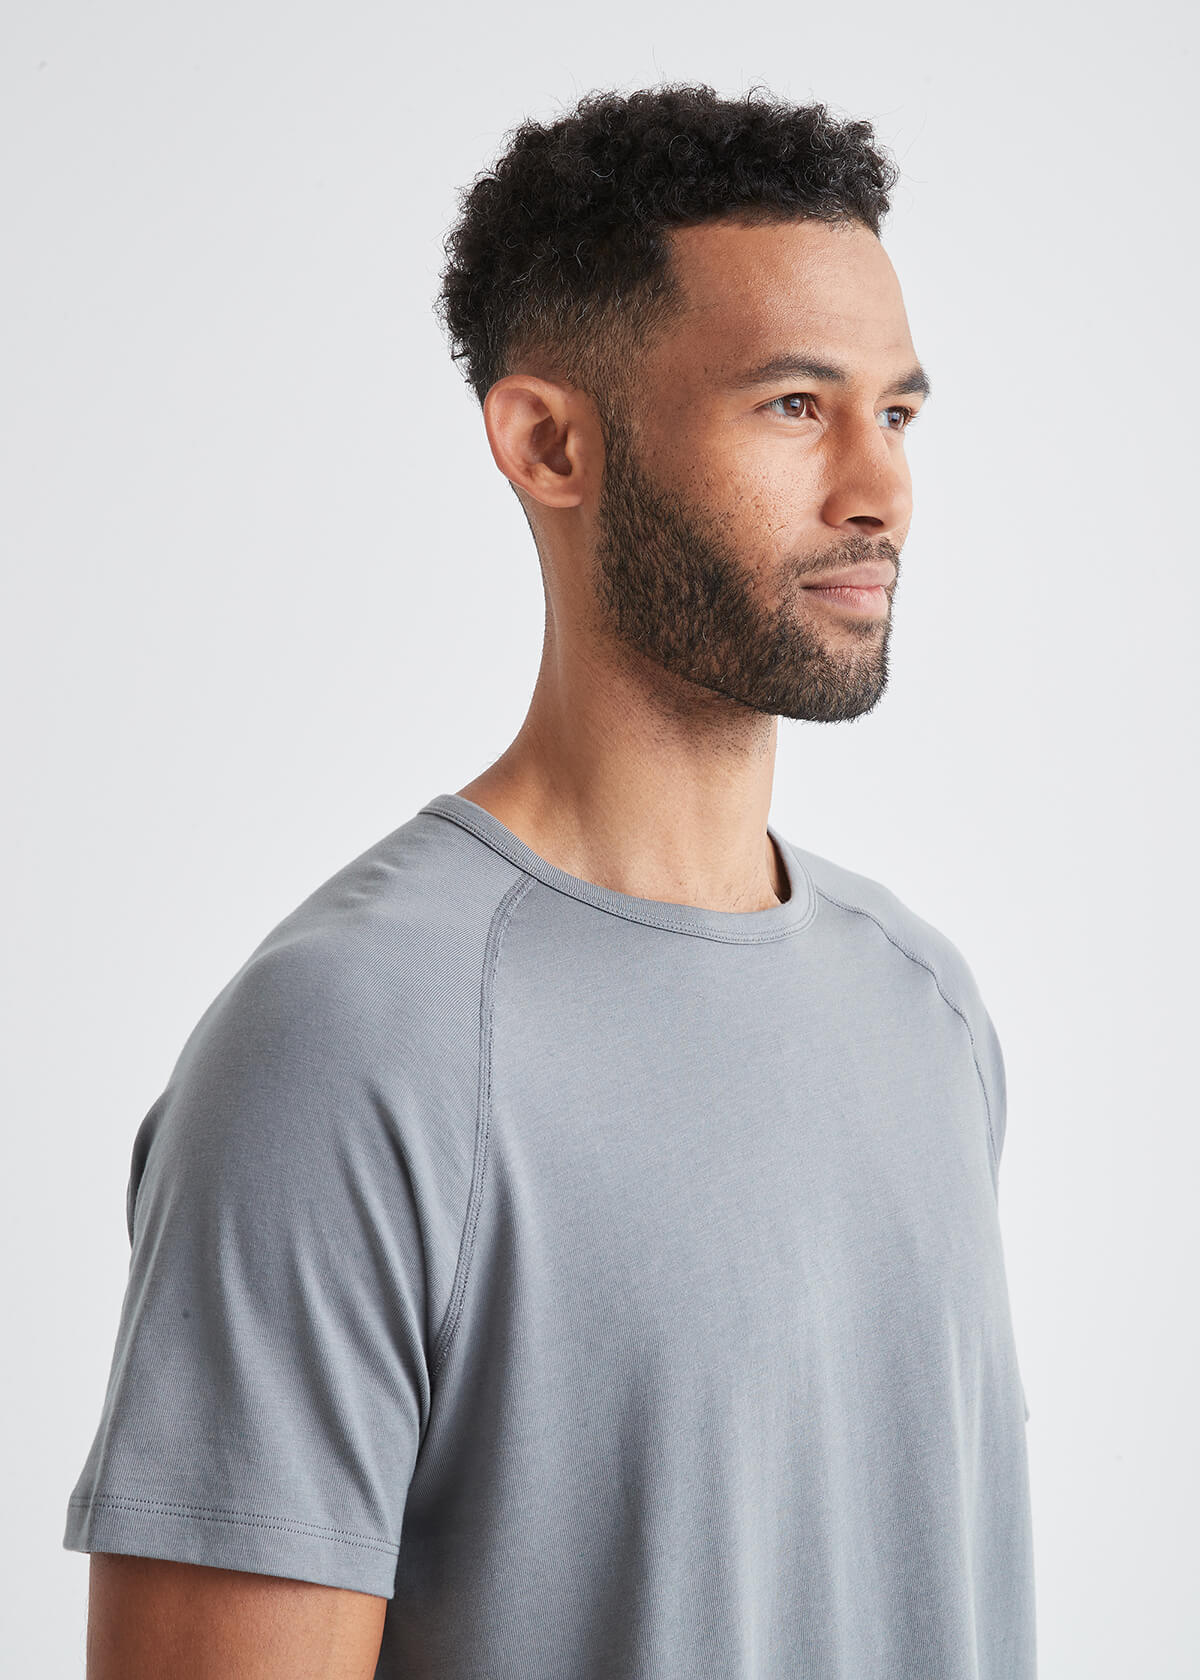 mens grey soft midweight t-shirt front neckline detail